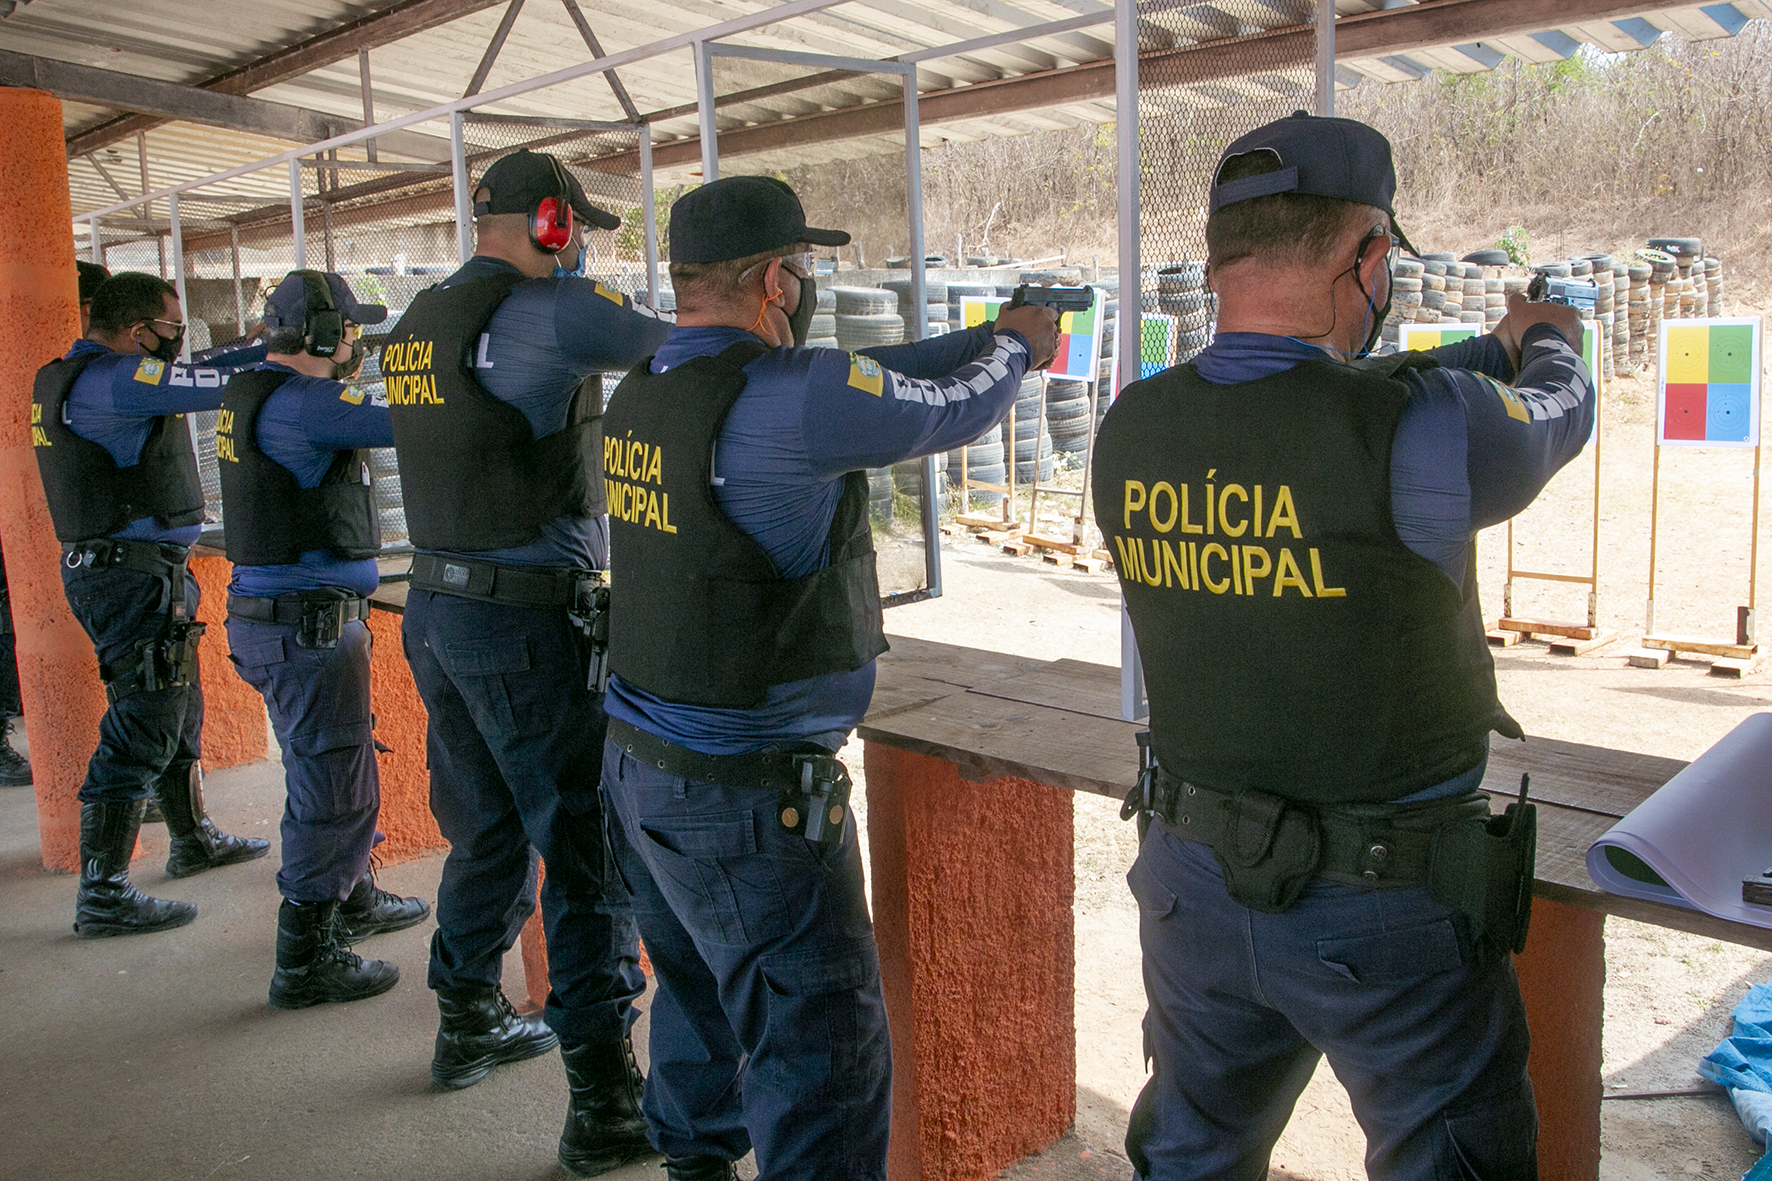 Policiais Municipais de Eusébio participam de curso de armamento e tiro